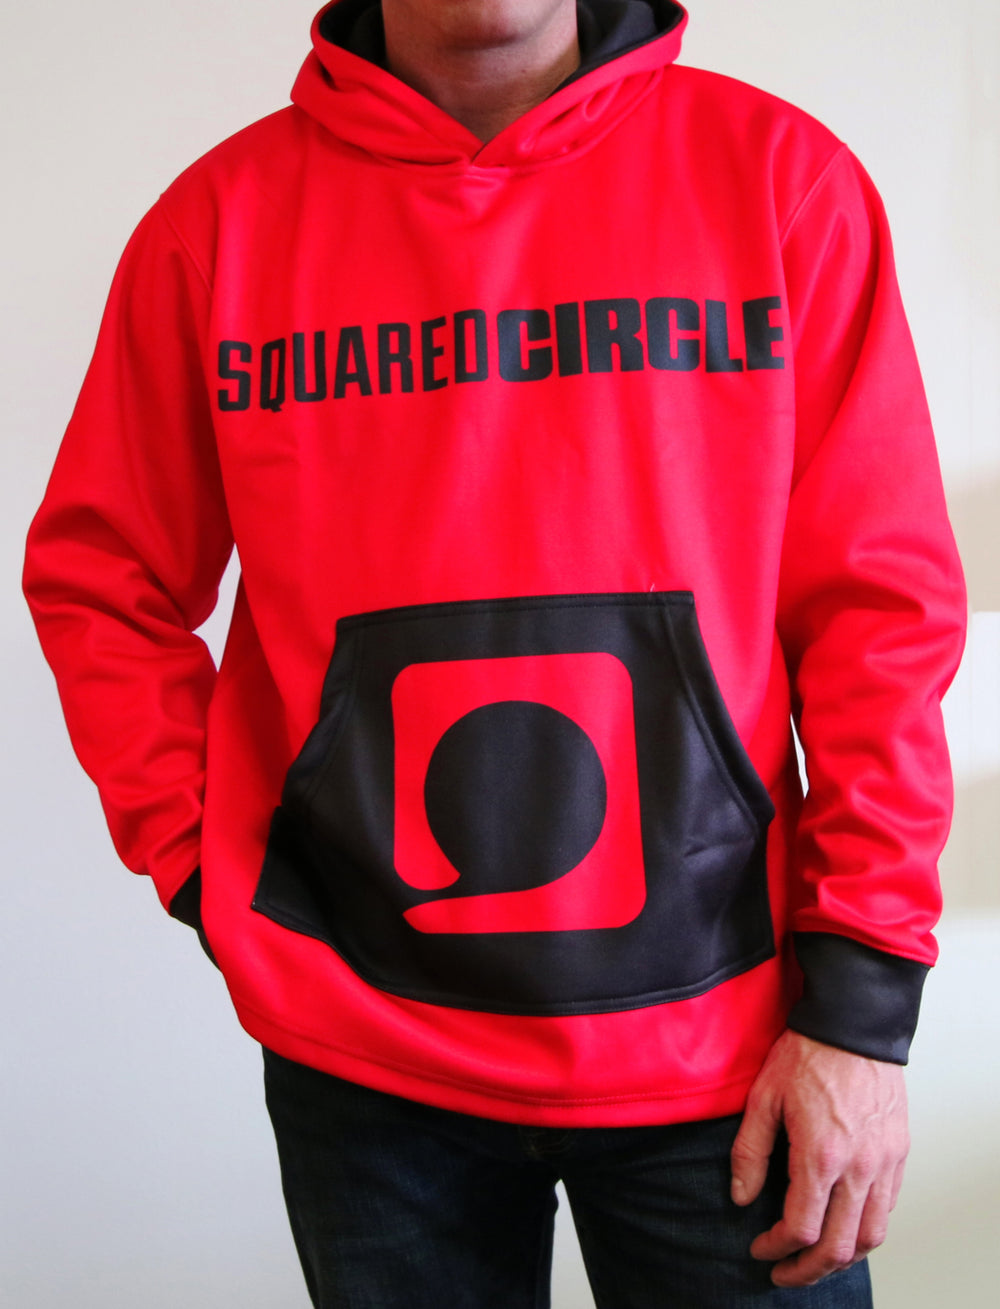 Squared Circle Red Hoodie